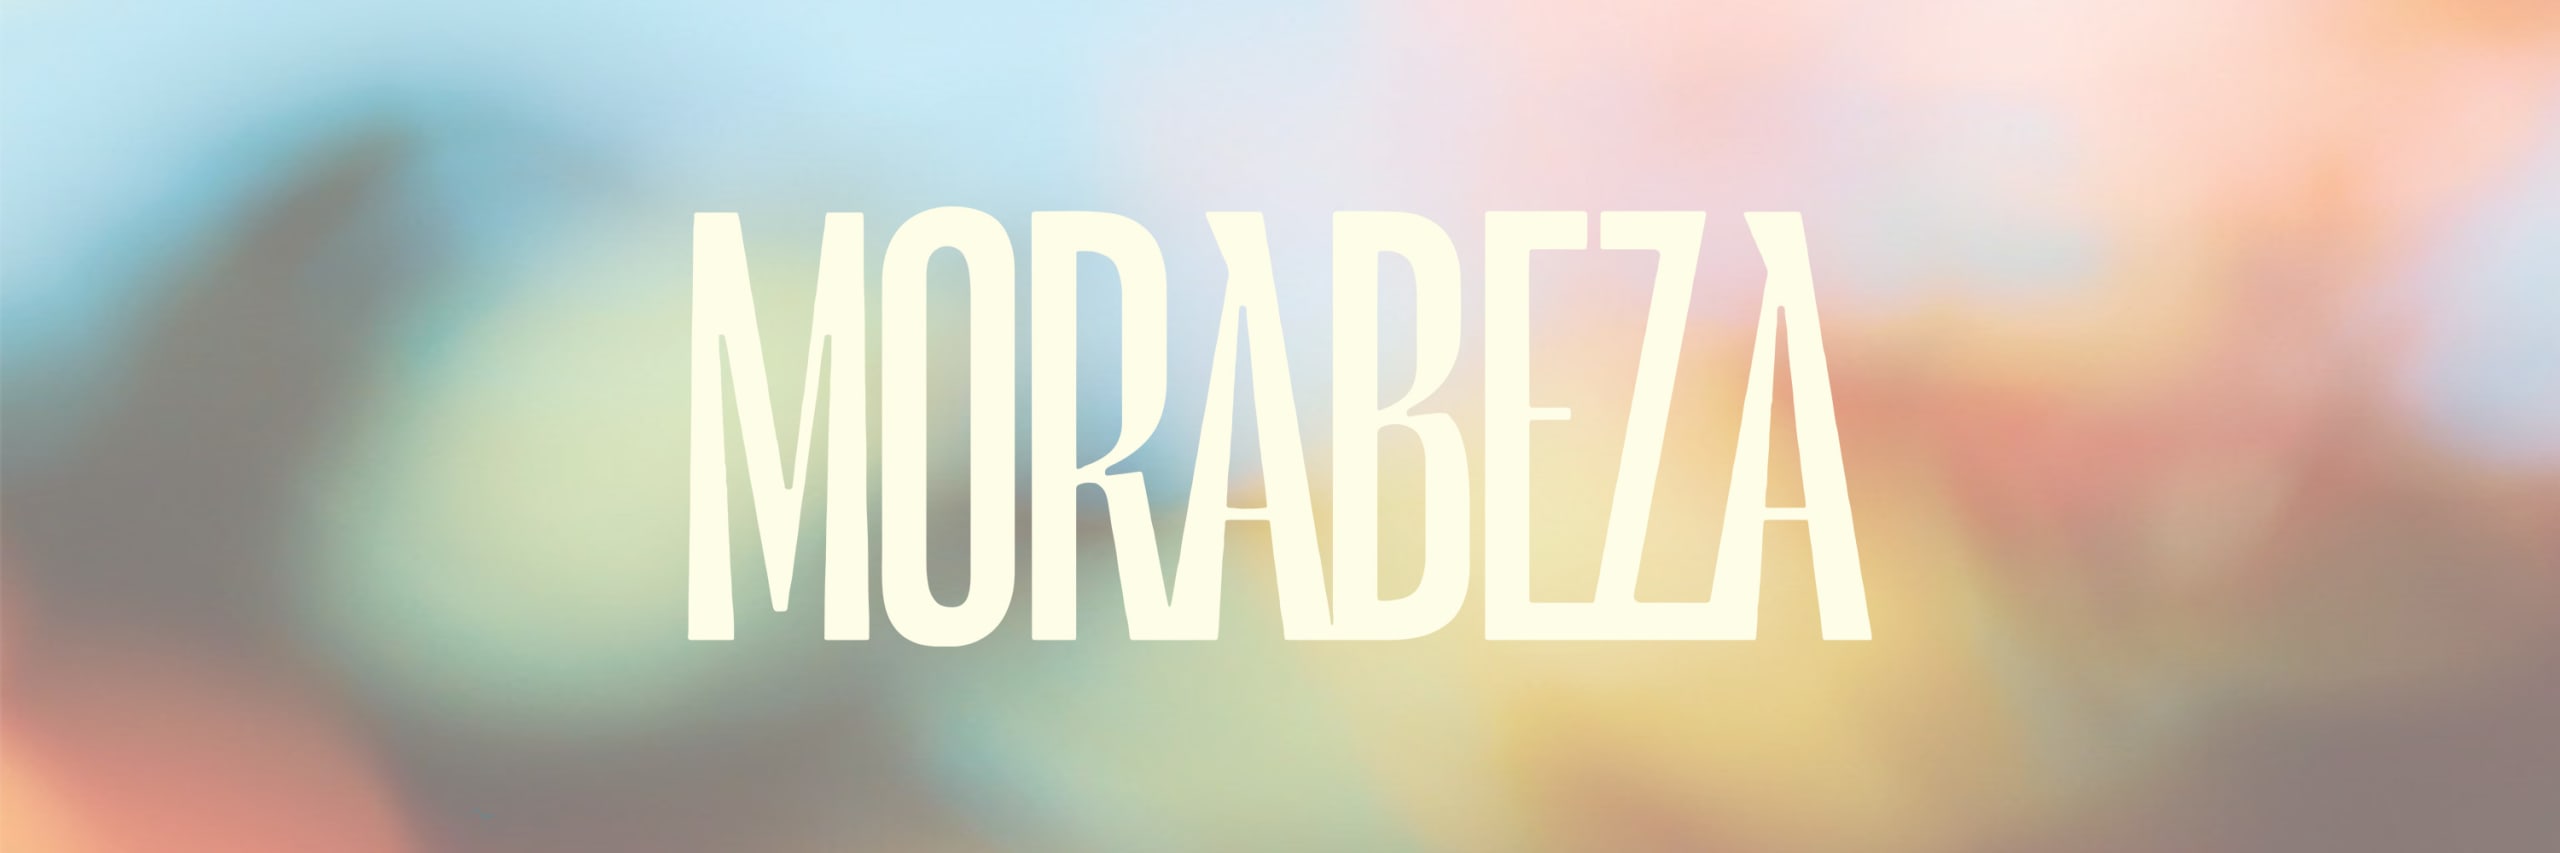 MORABEZ.ART